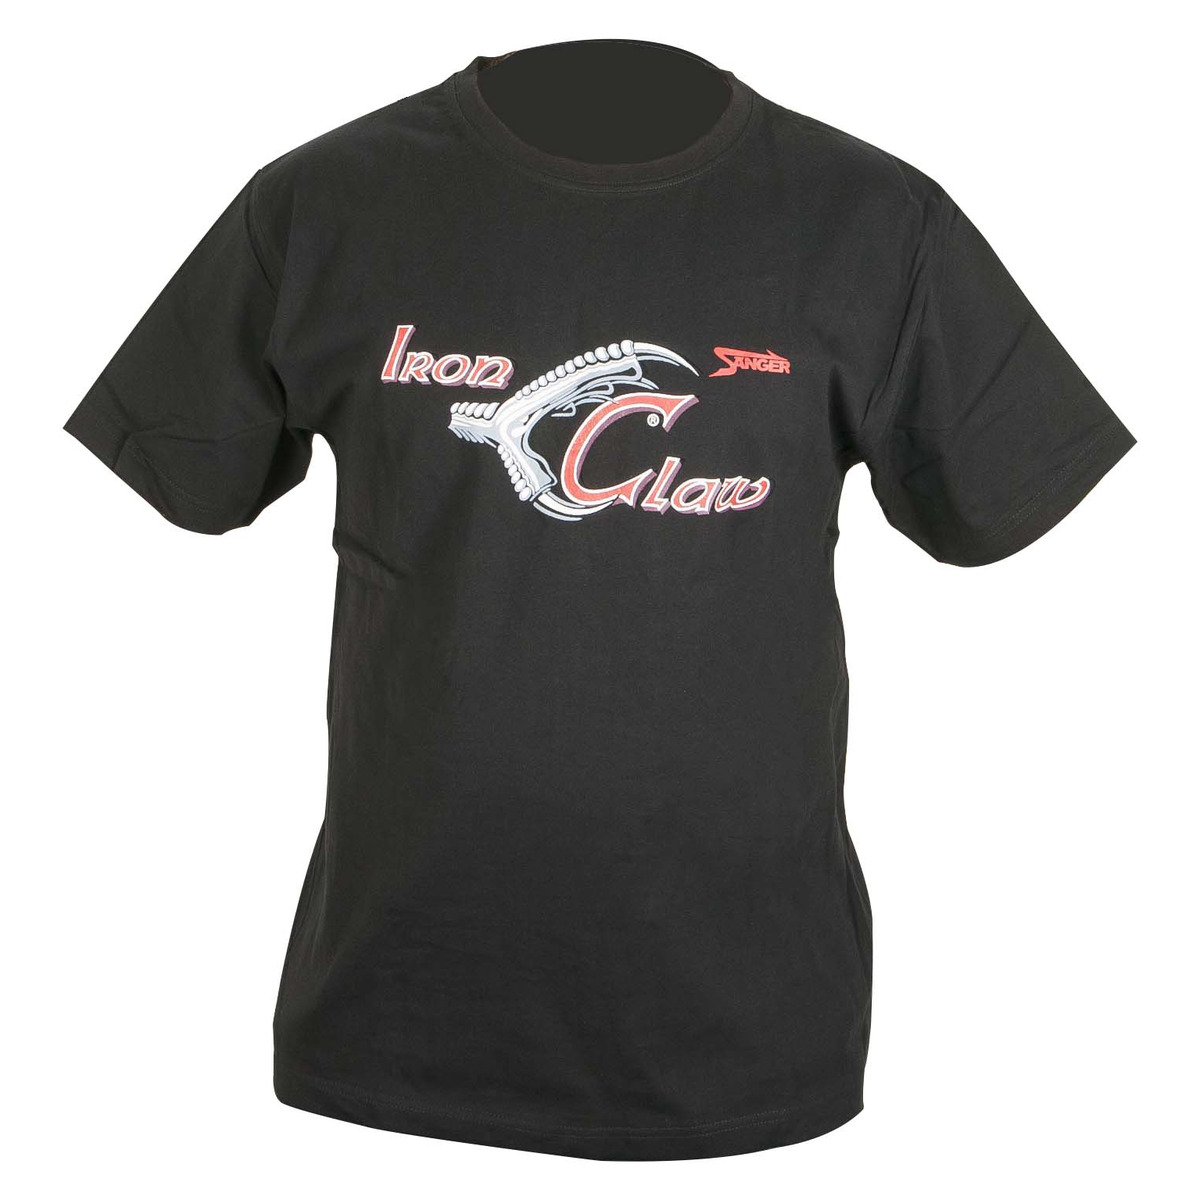 Iron Claw T-shirt - M